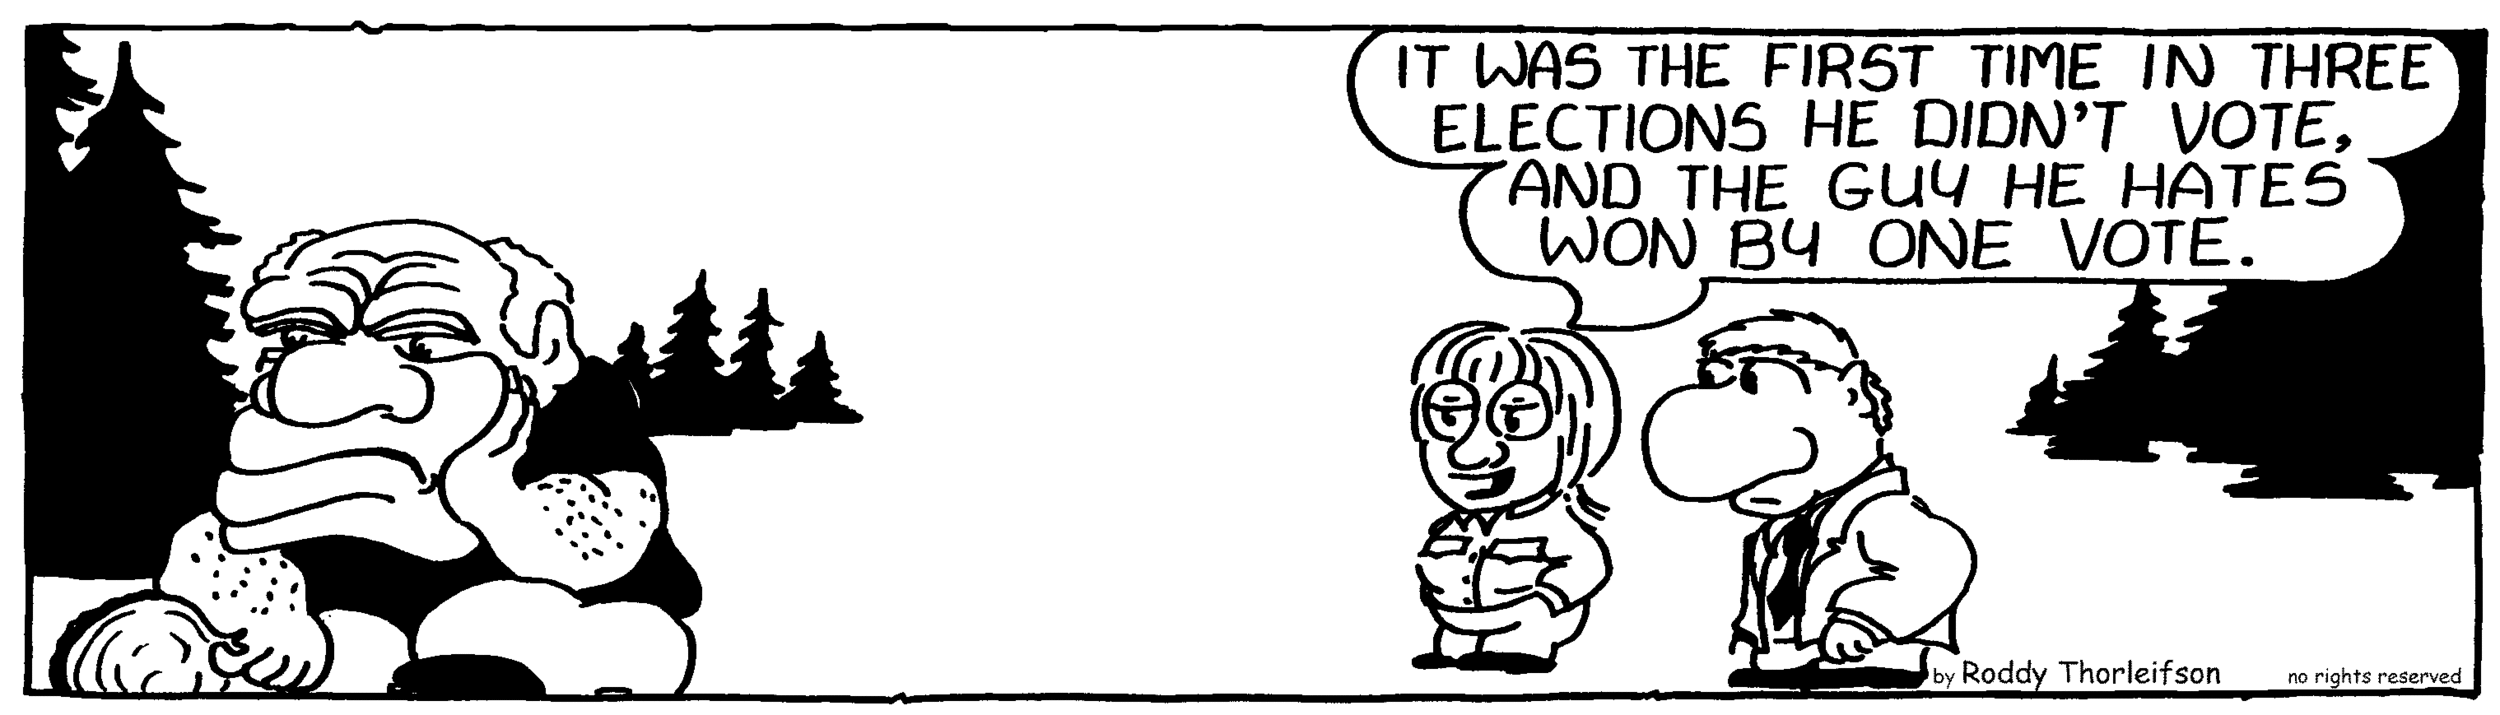 free cartoon politics politicians political voter turnout